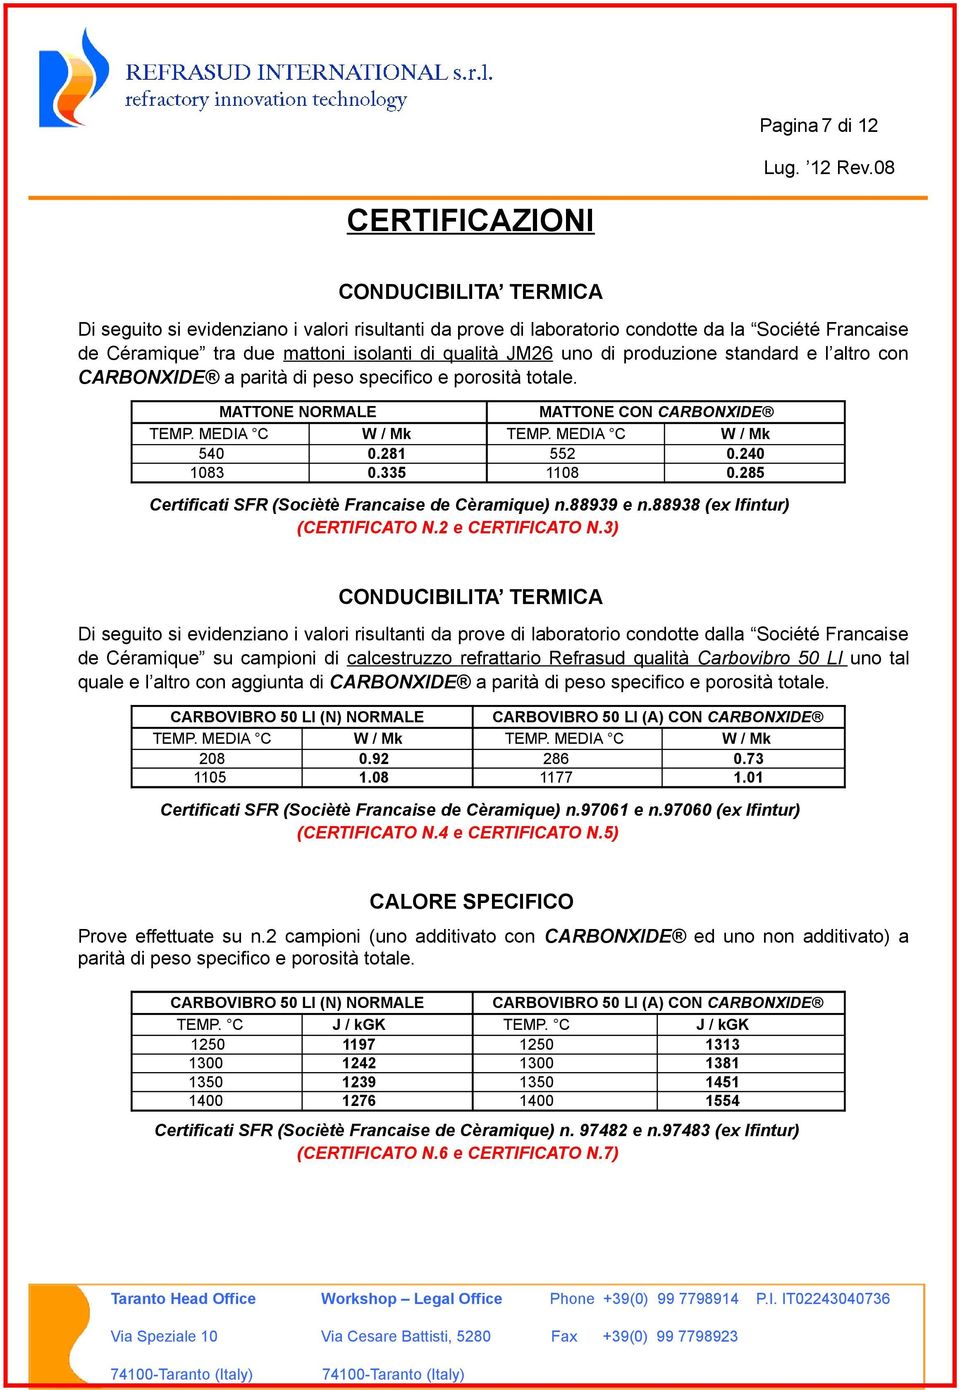 MEDIA C W / Mk 552 0.240 1108 0.285 Certificati SFR (Sociètè Francaise de Cèramique) n.88939 e n.88938 (ex Ifintur) (CERTIFICATO N.2 e CERTIFICATO N.